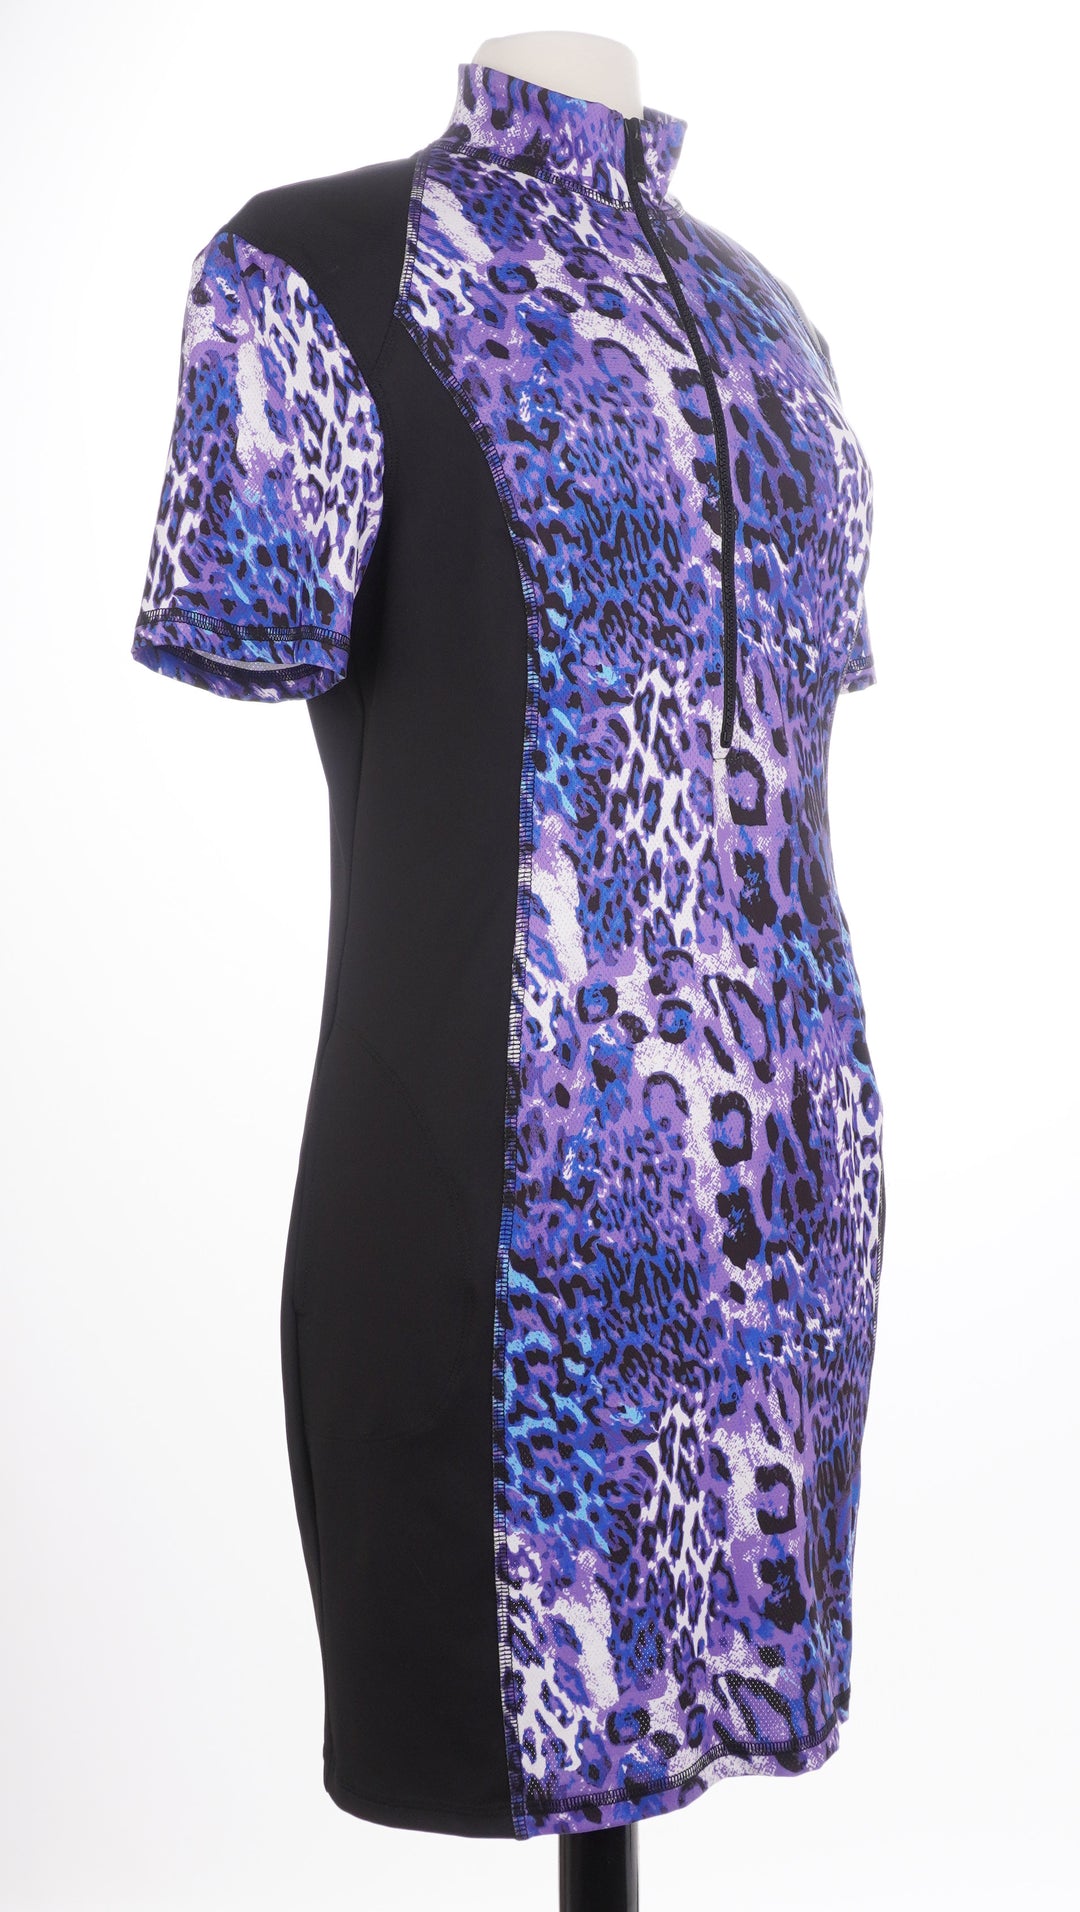 Kevan Hall Sport Cheetah Short Sleeve Dress - Size Large - Skorzie